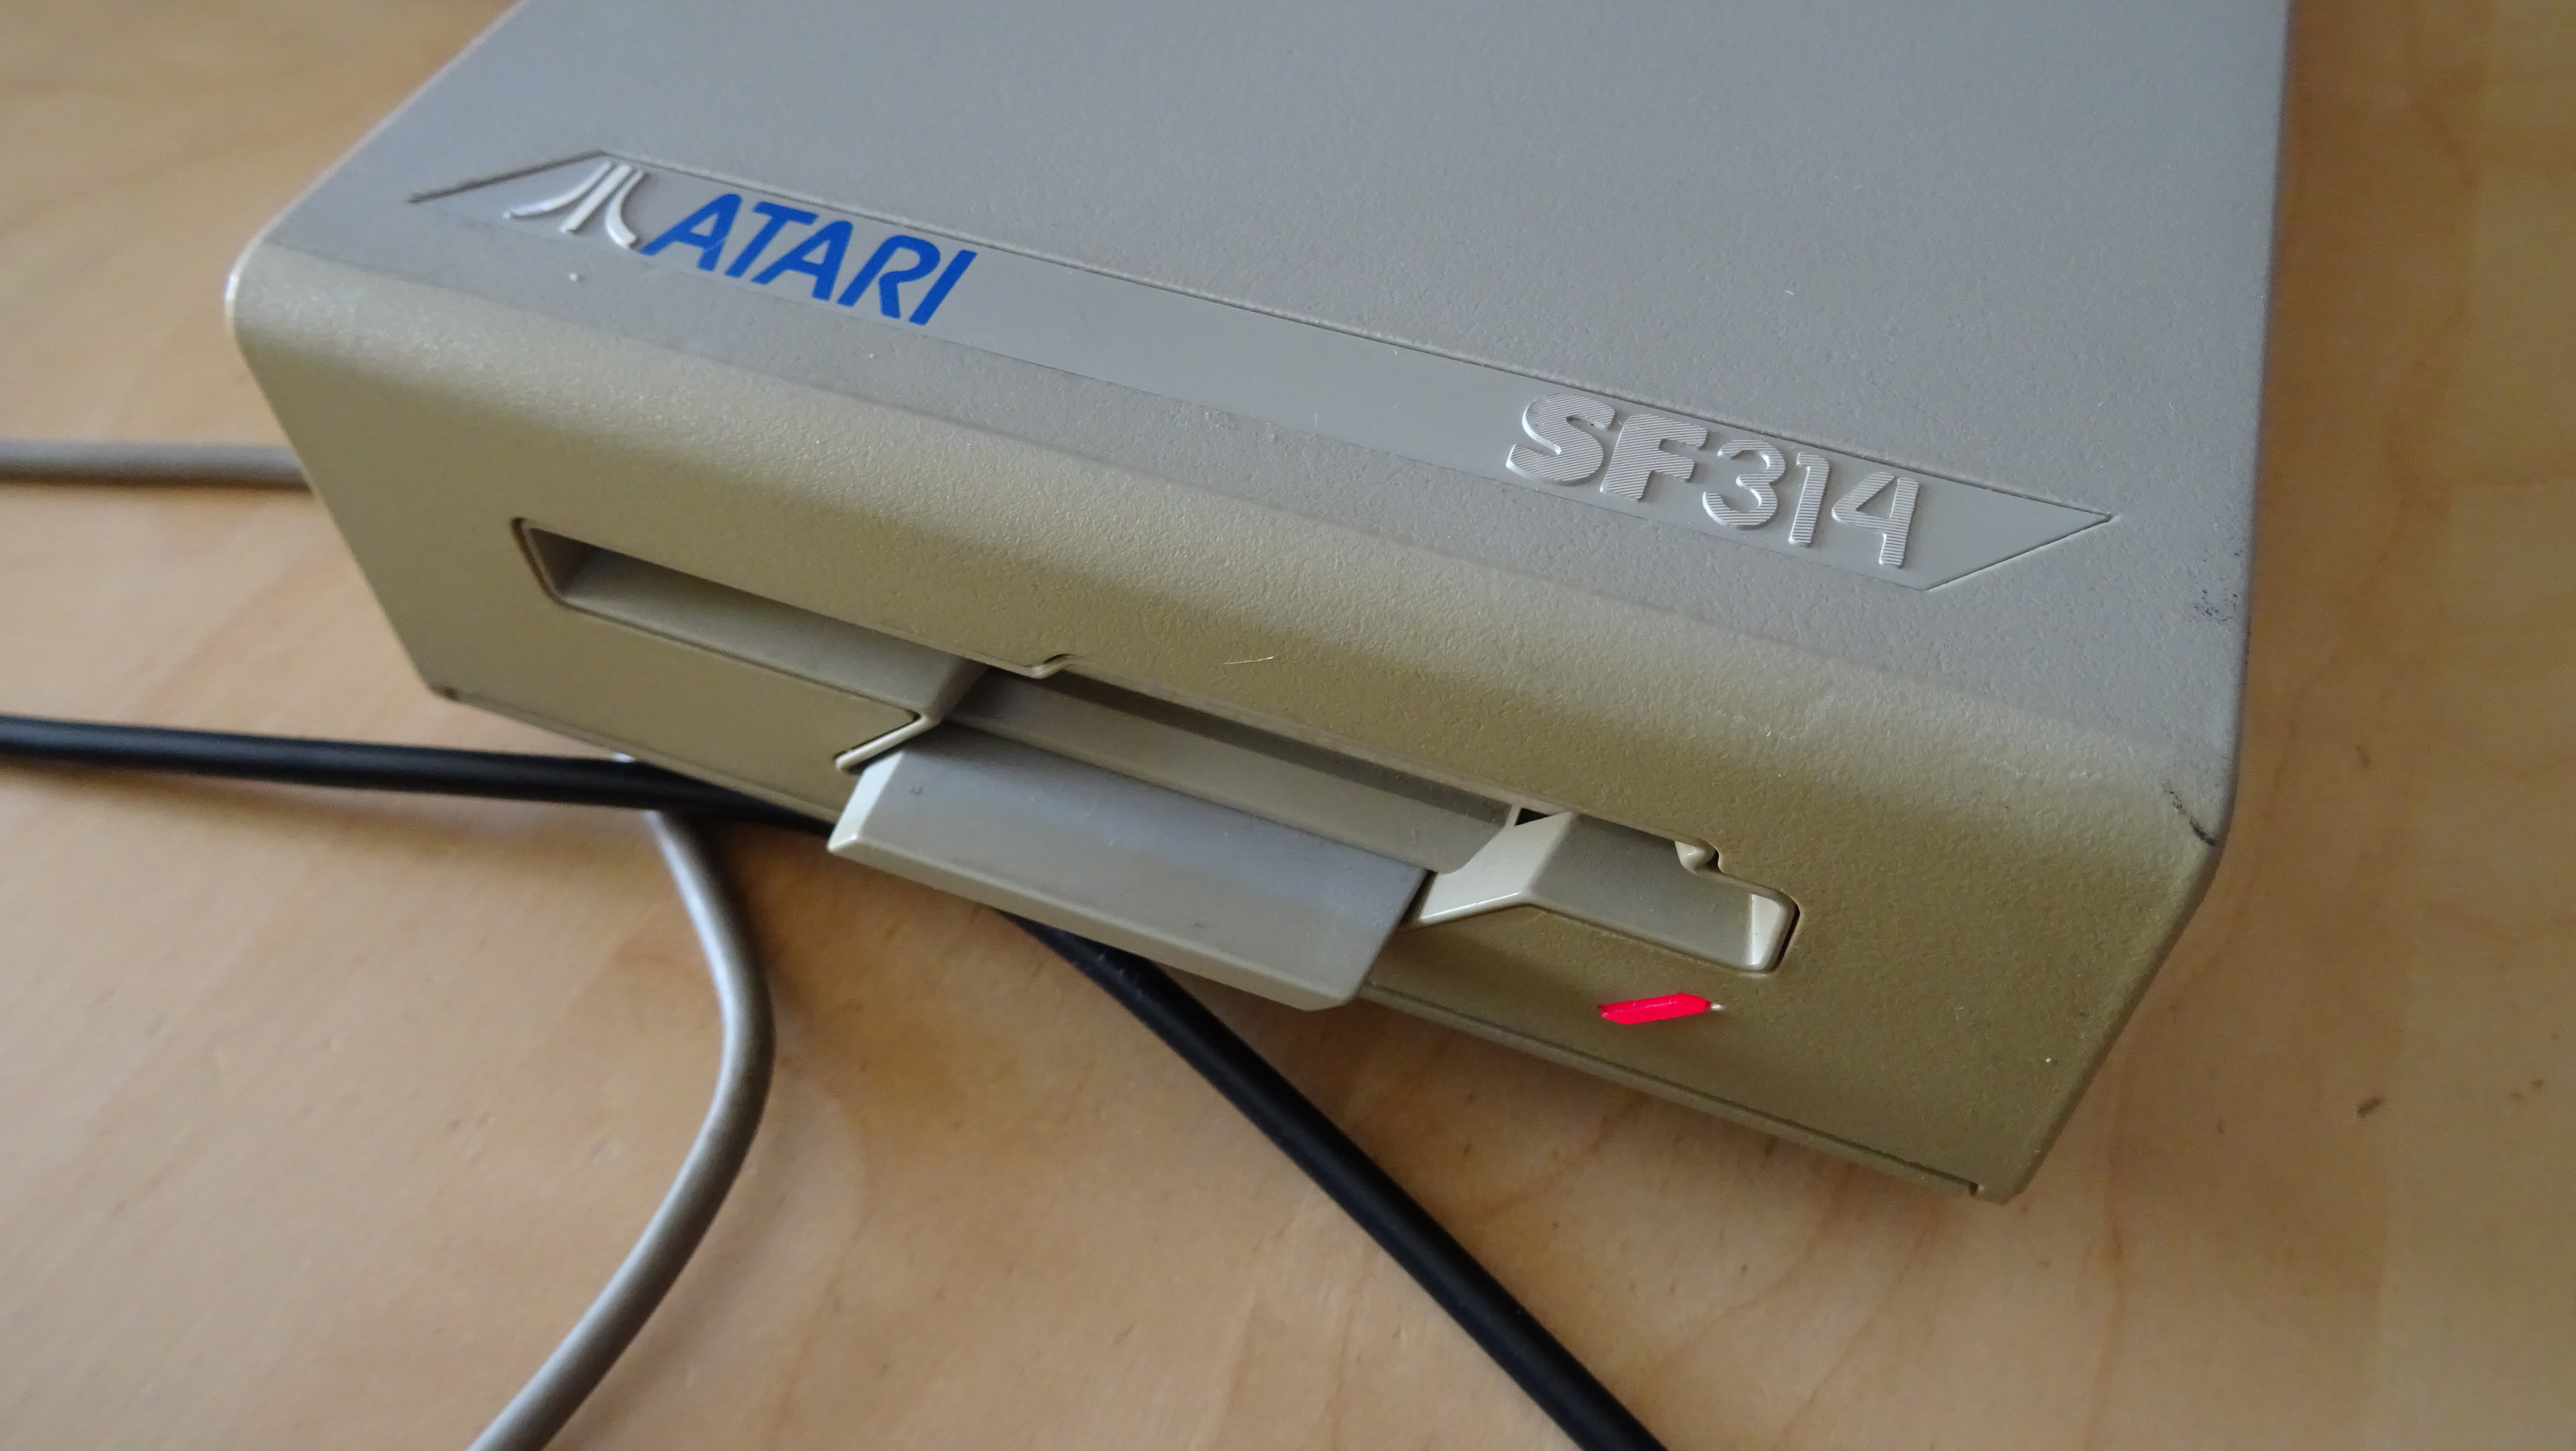 [TEST] Lecteurs disquettes externes SF354/SF314 - Atari ST D8xy